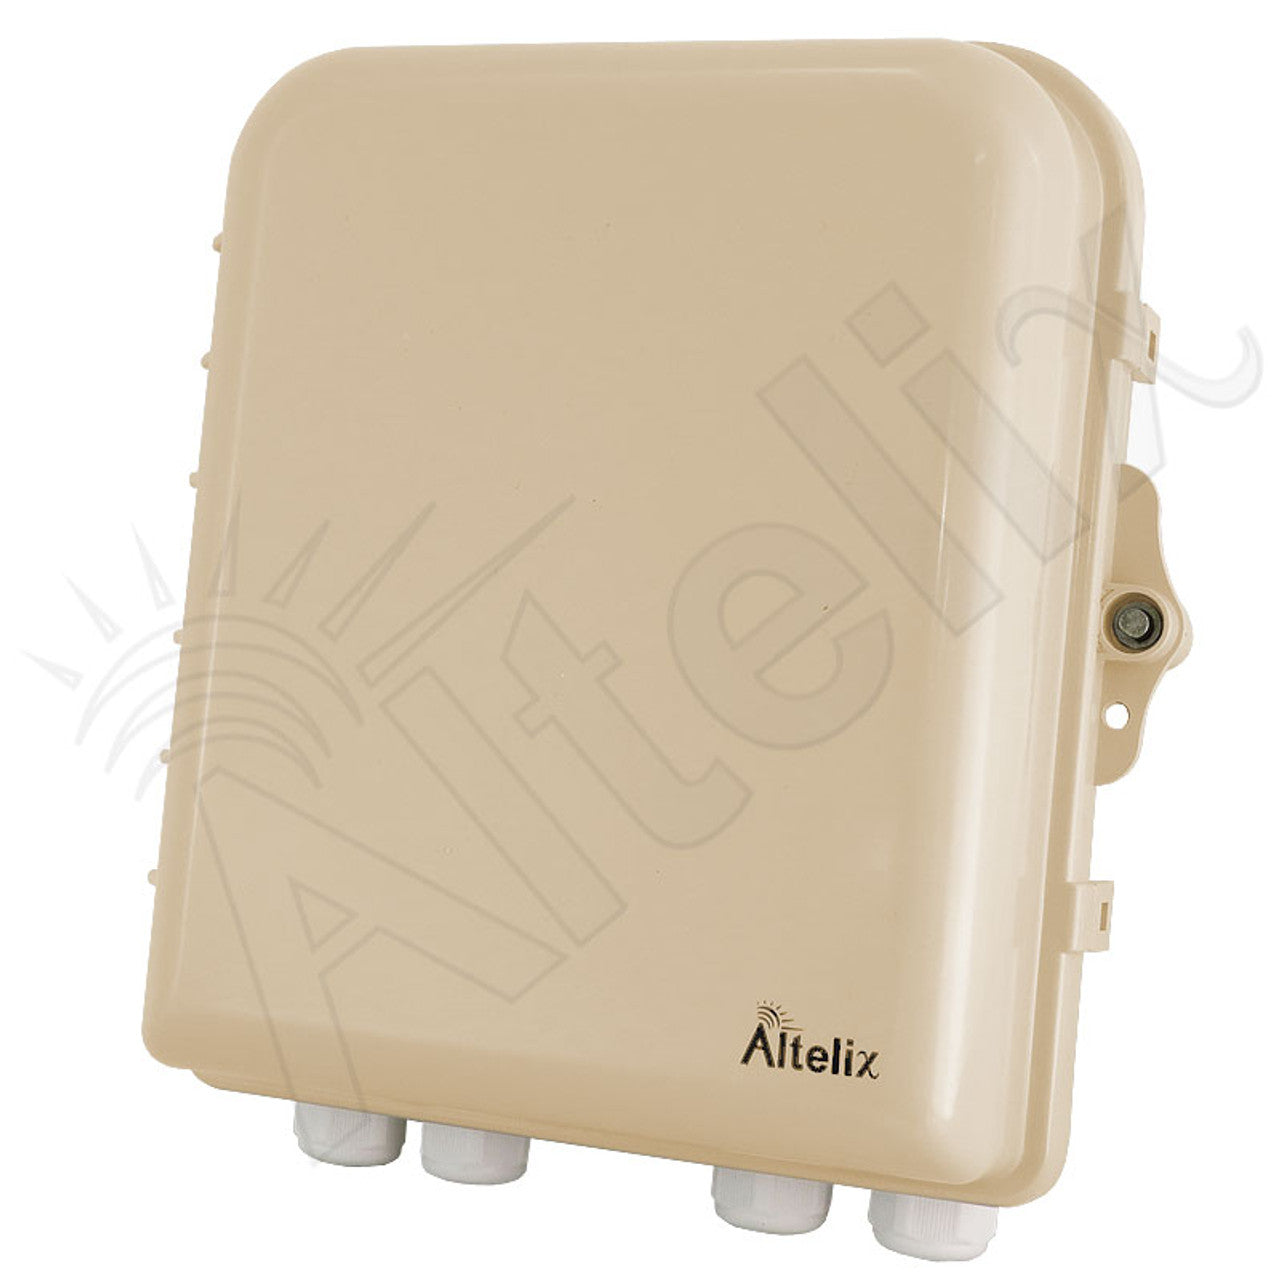 Altelix 10x9x4 IP66 NEMA 4X PC+ABS Weatherproof Utility Box with Hinged Door and Aluminum Mounting Plate-4